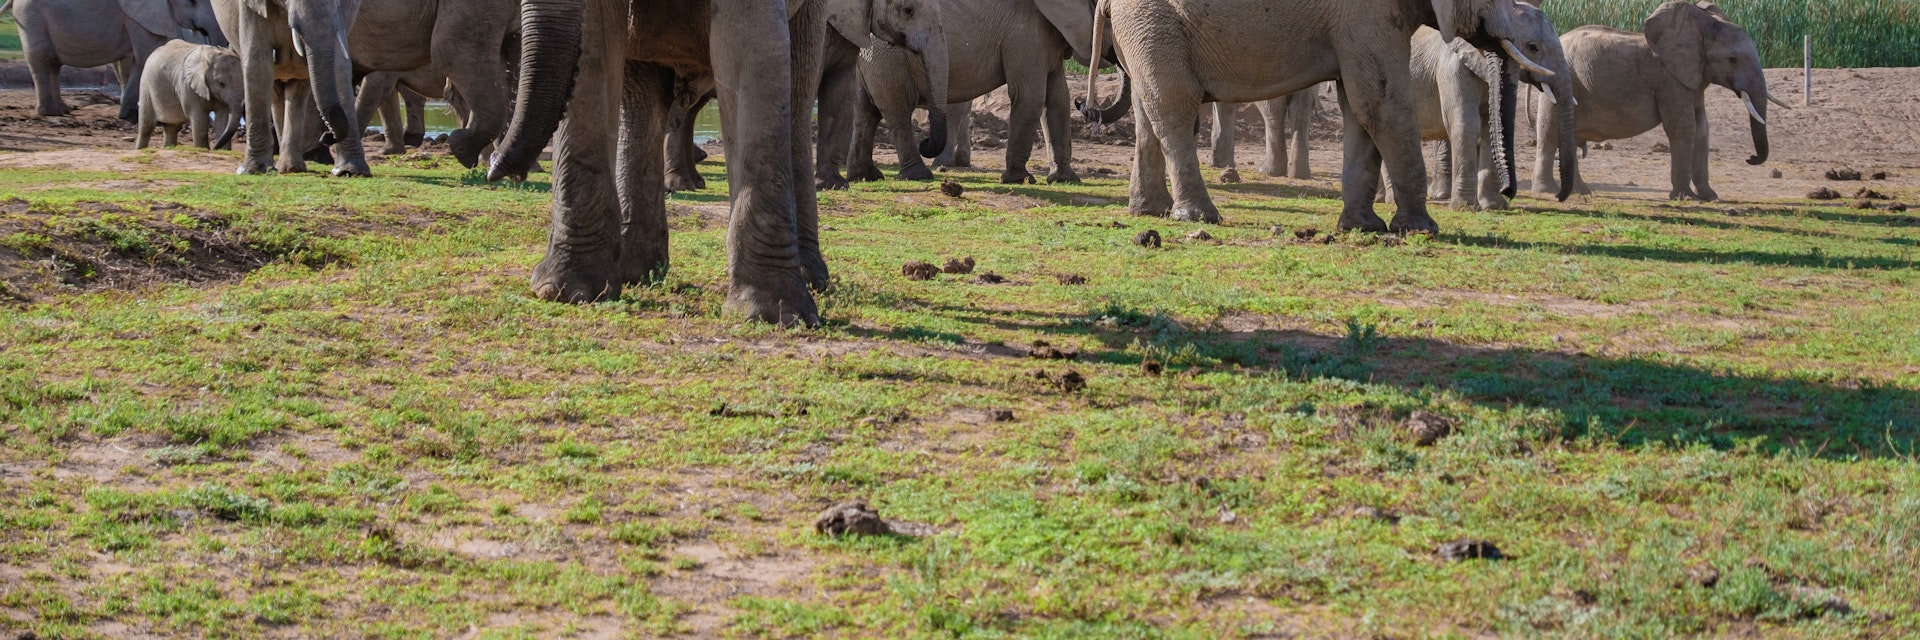 Family of elephants in Addo Elephant National Park.